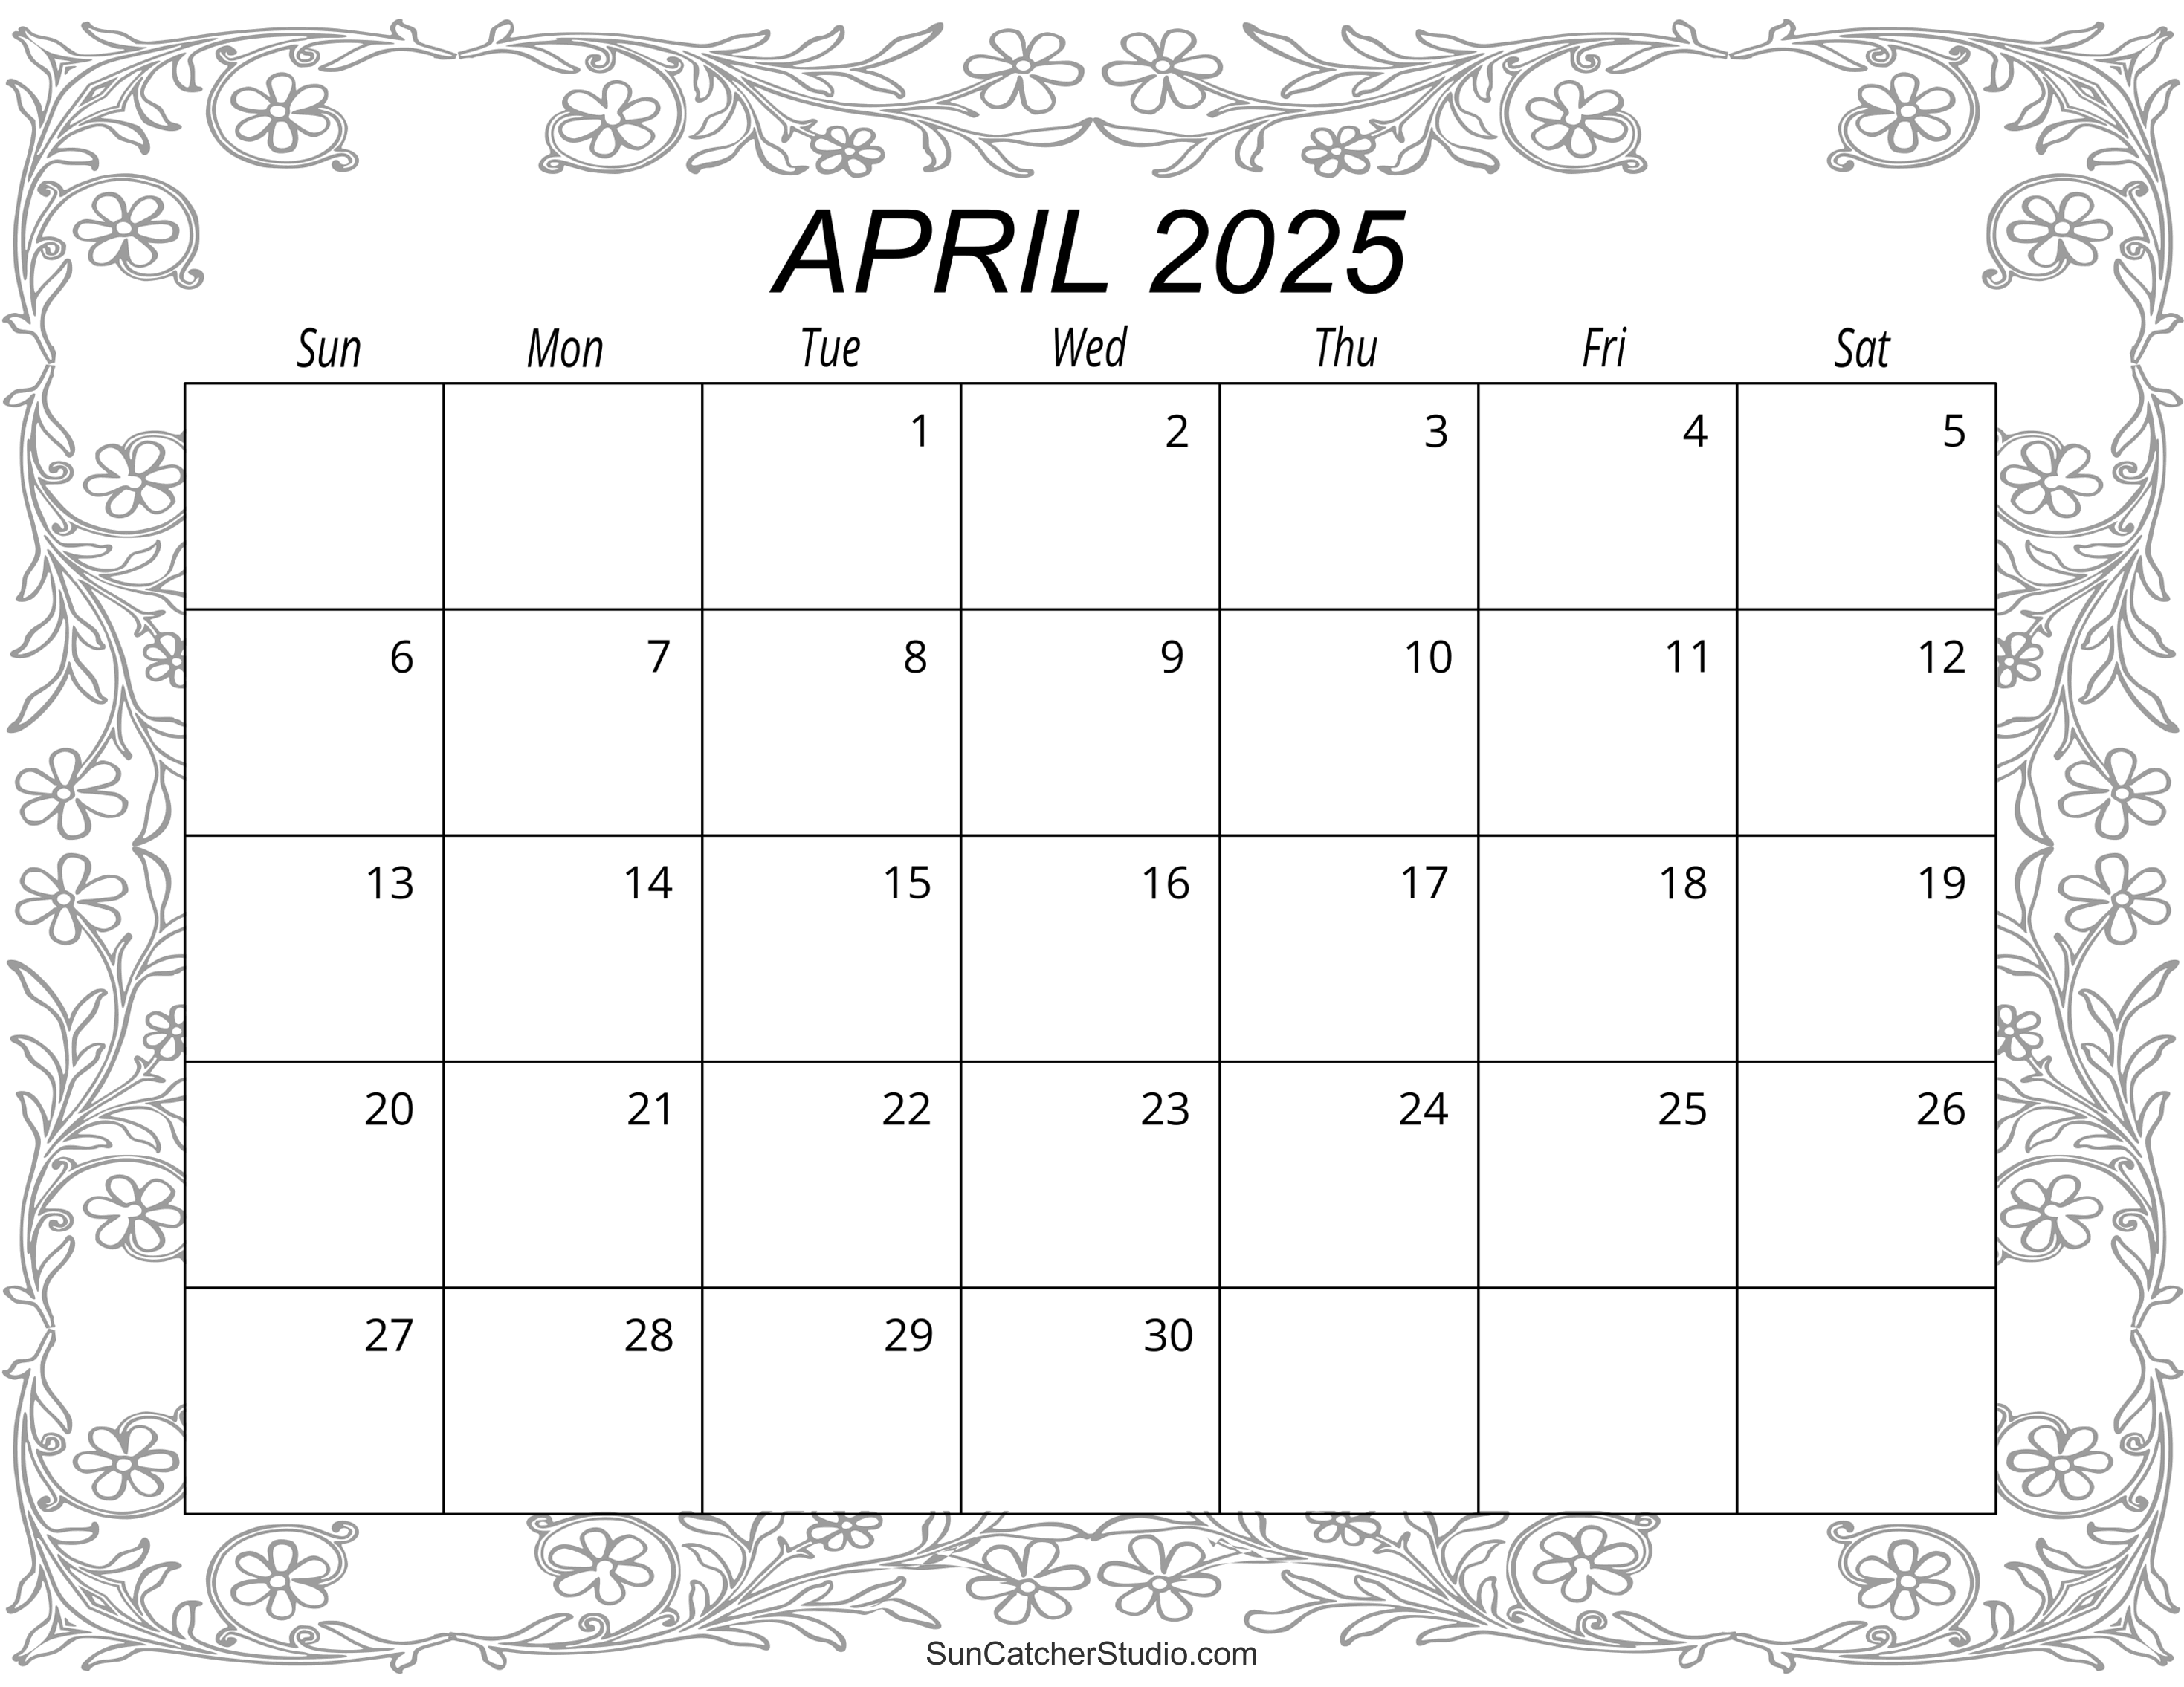 April 2025 Calendar Free Printable Diy Projects Patterns